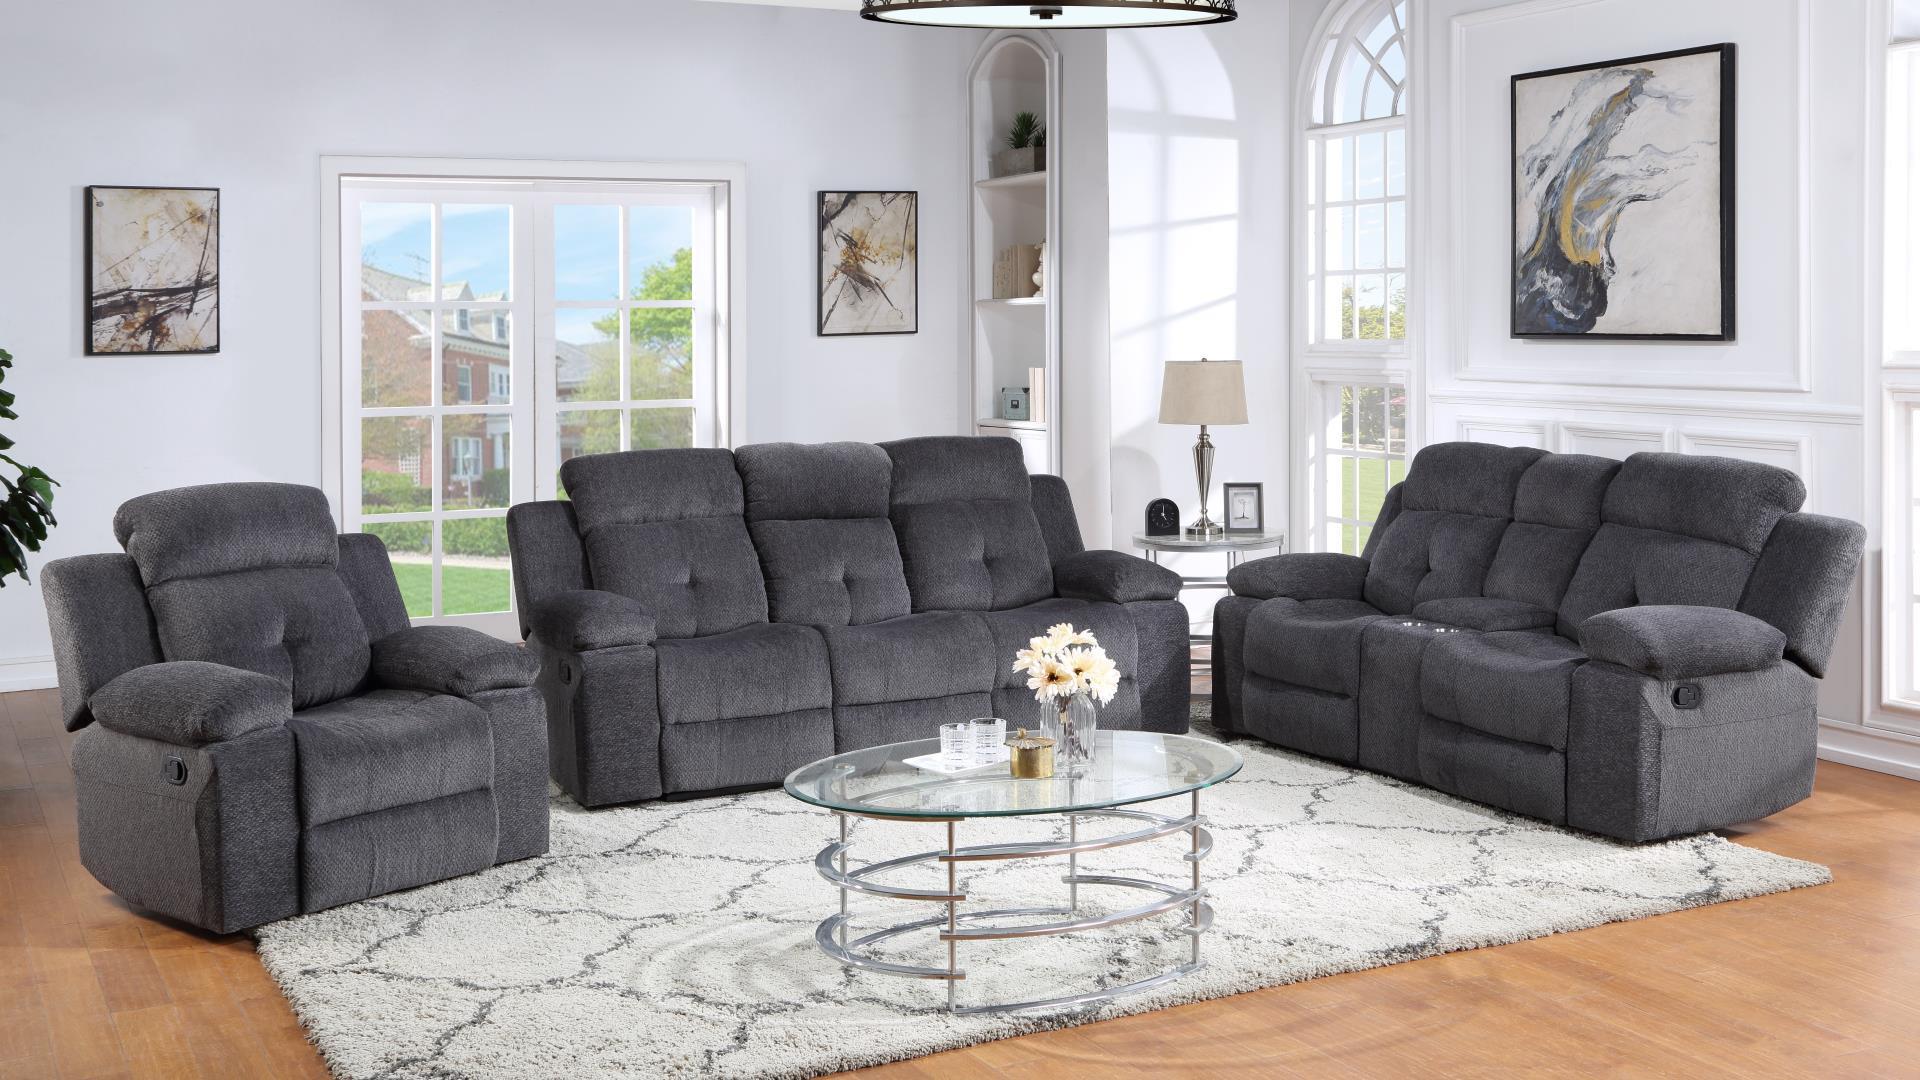 

        
Galaxy Home Furniture PHOENIX Recliner Sofa Set Gray Chenille 808857697899
